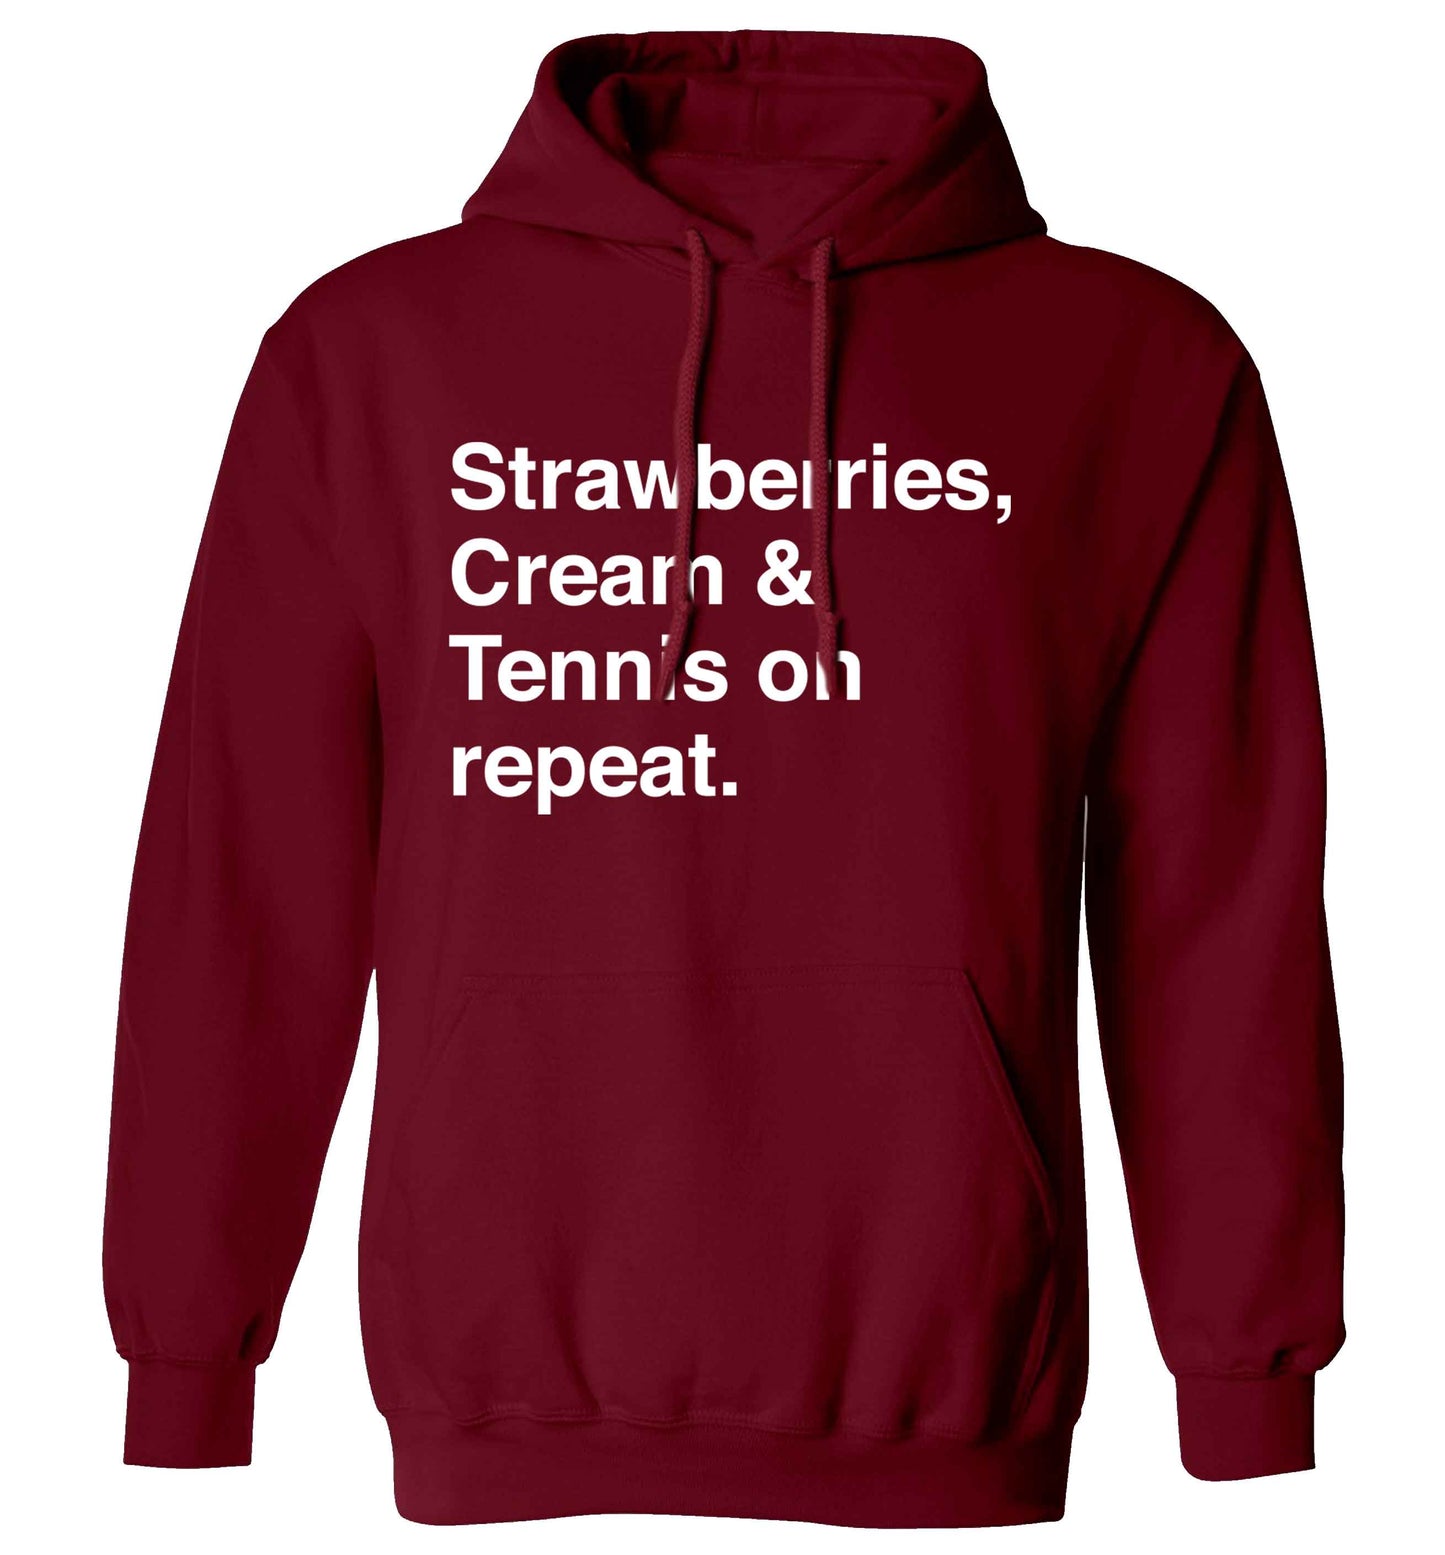 Strawberries, cream and tennis on repeat adults unisex maroon hoodie 2XL